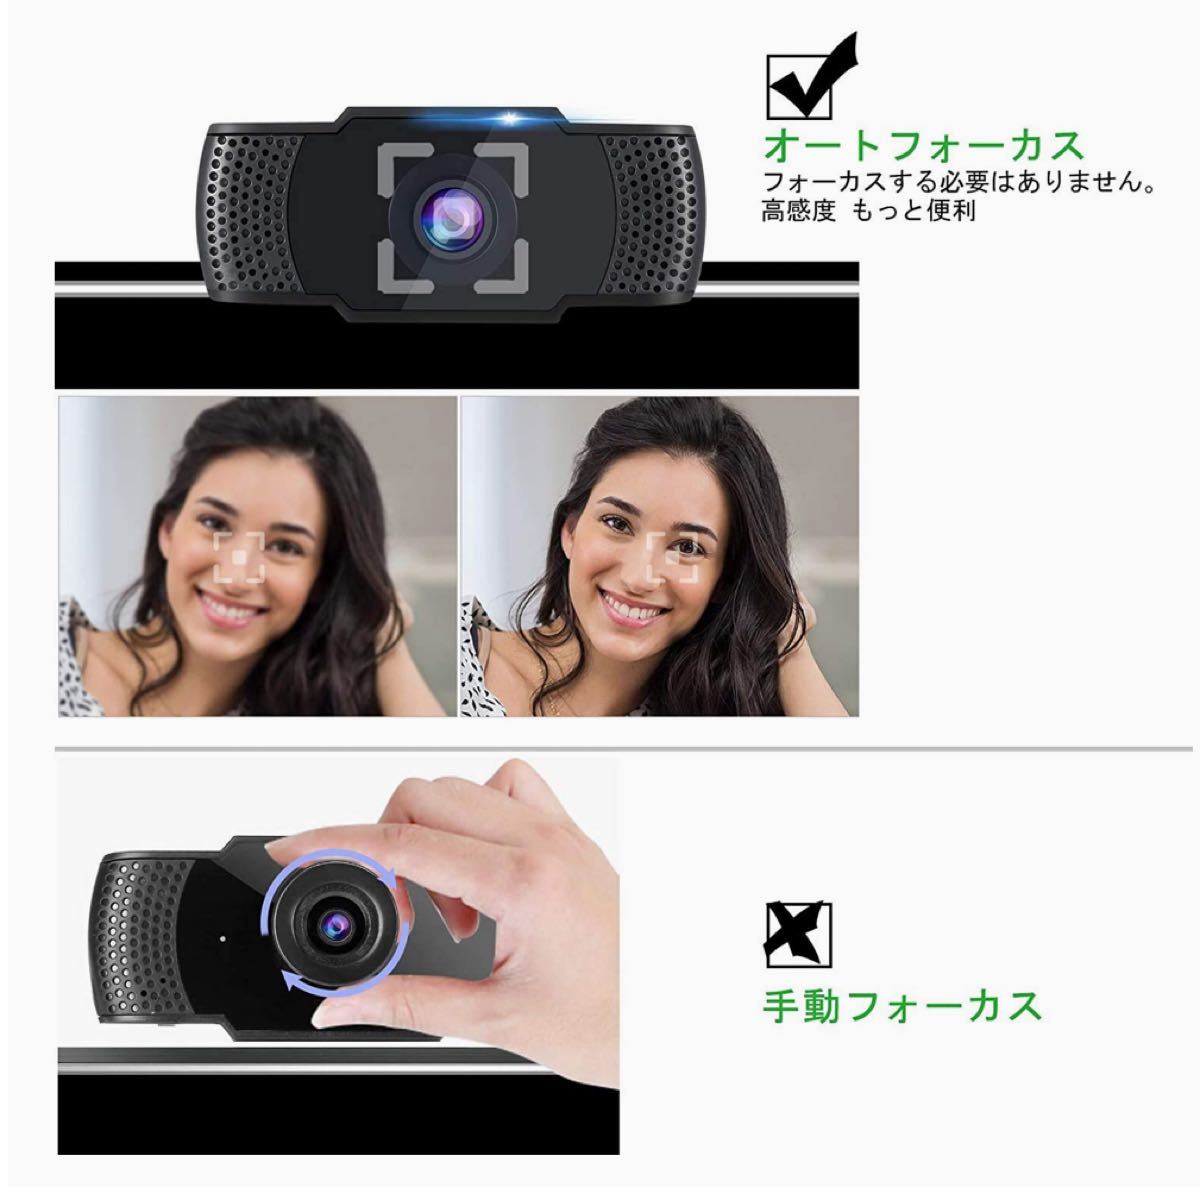 Webカメラ HD 1080P ウェブカメラ PC カメラ USBカメラ 在宅勤務 ビデオ通話/会議 ネット授業 自動光補正